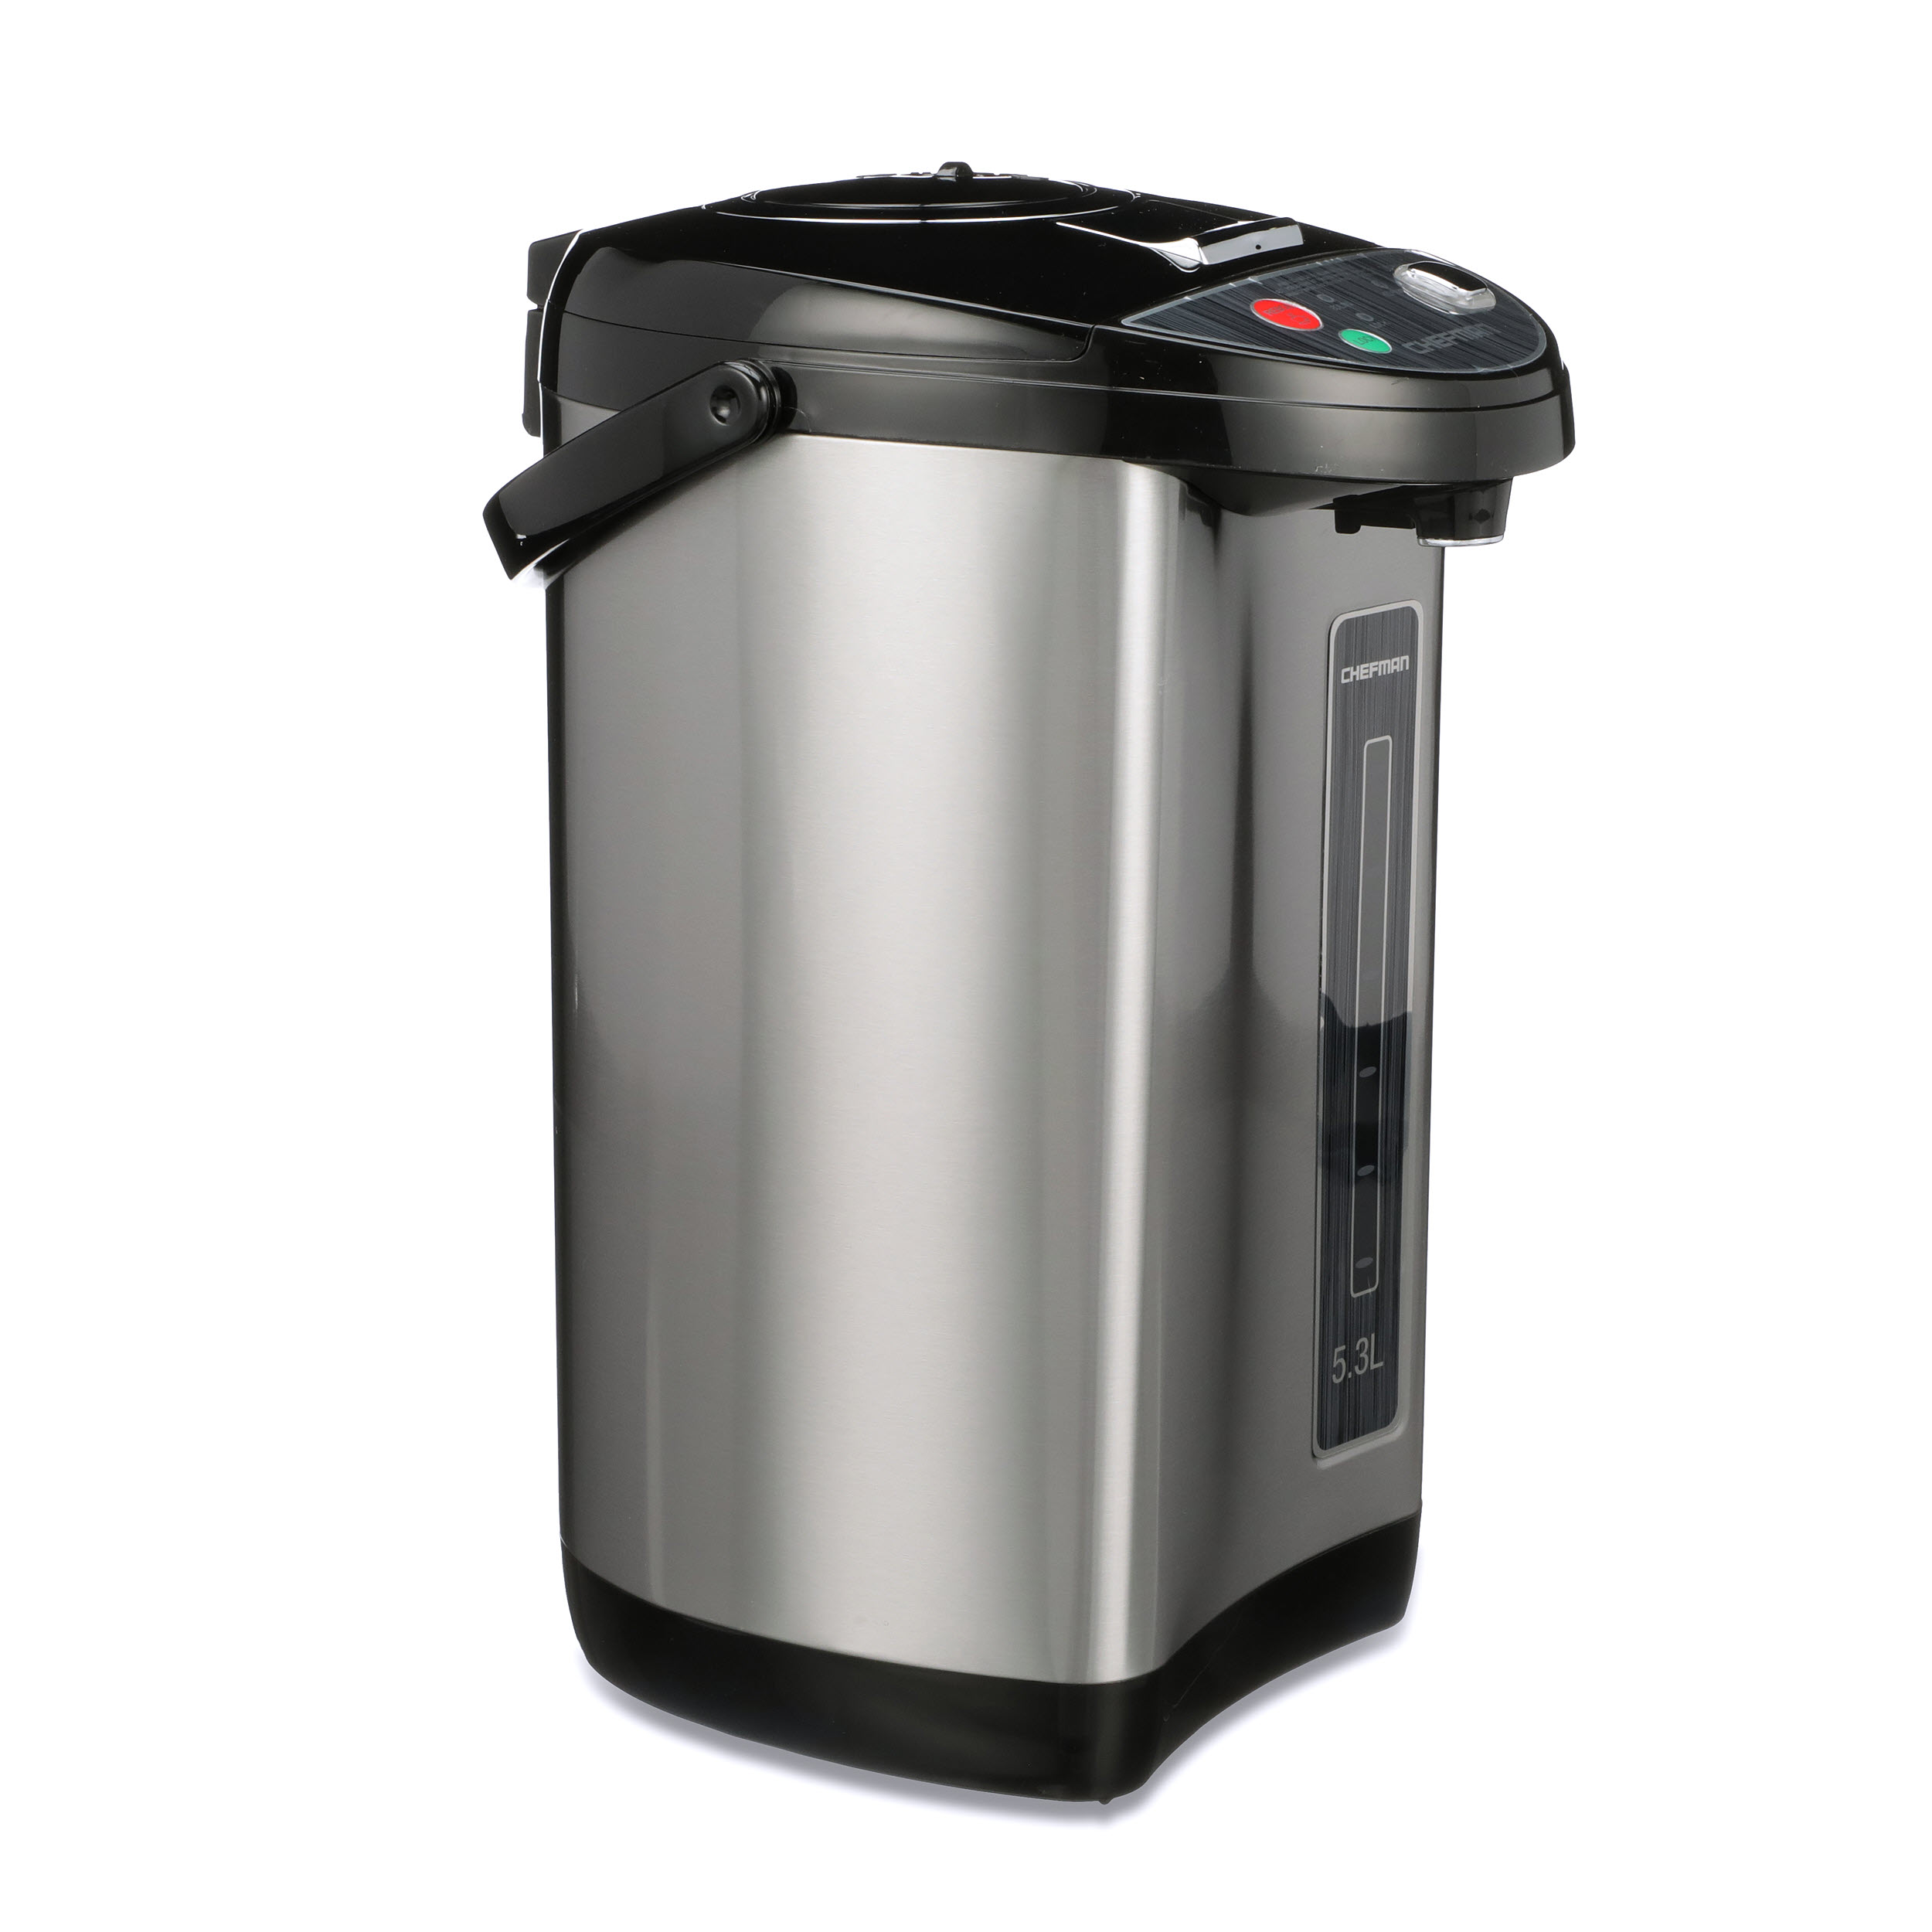 Chefman Electric Hot Water Pot Urn w/ Auto & Manual 5.3 Liter, Silver